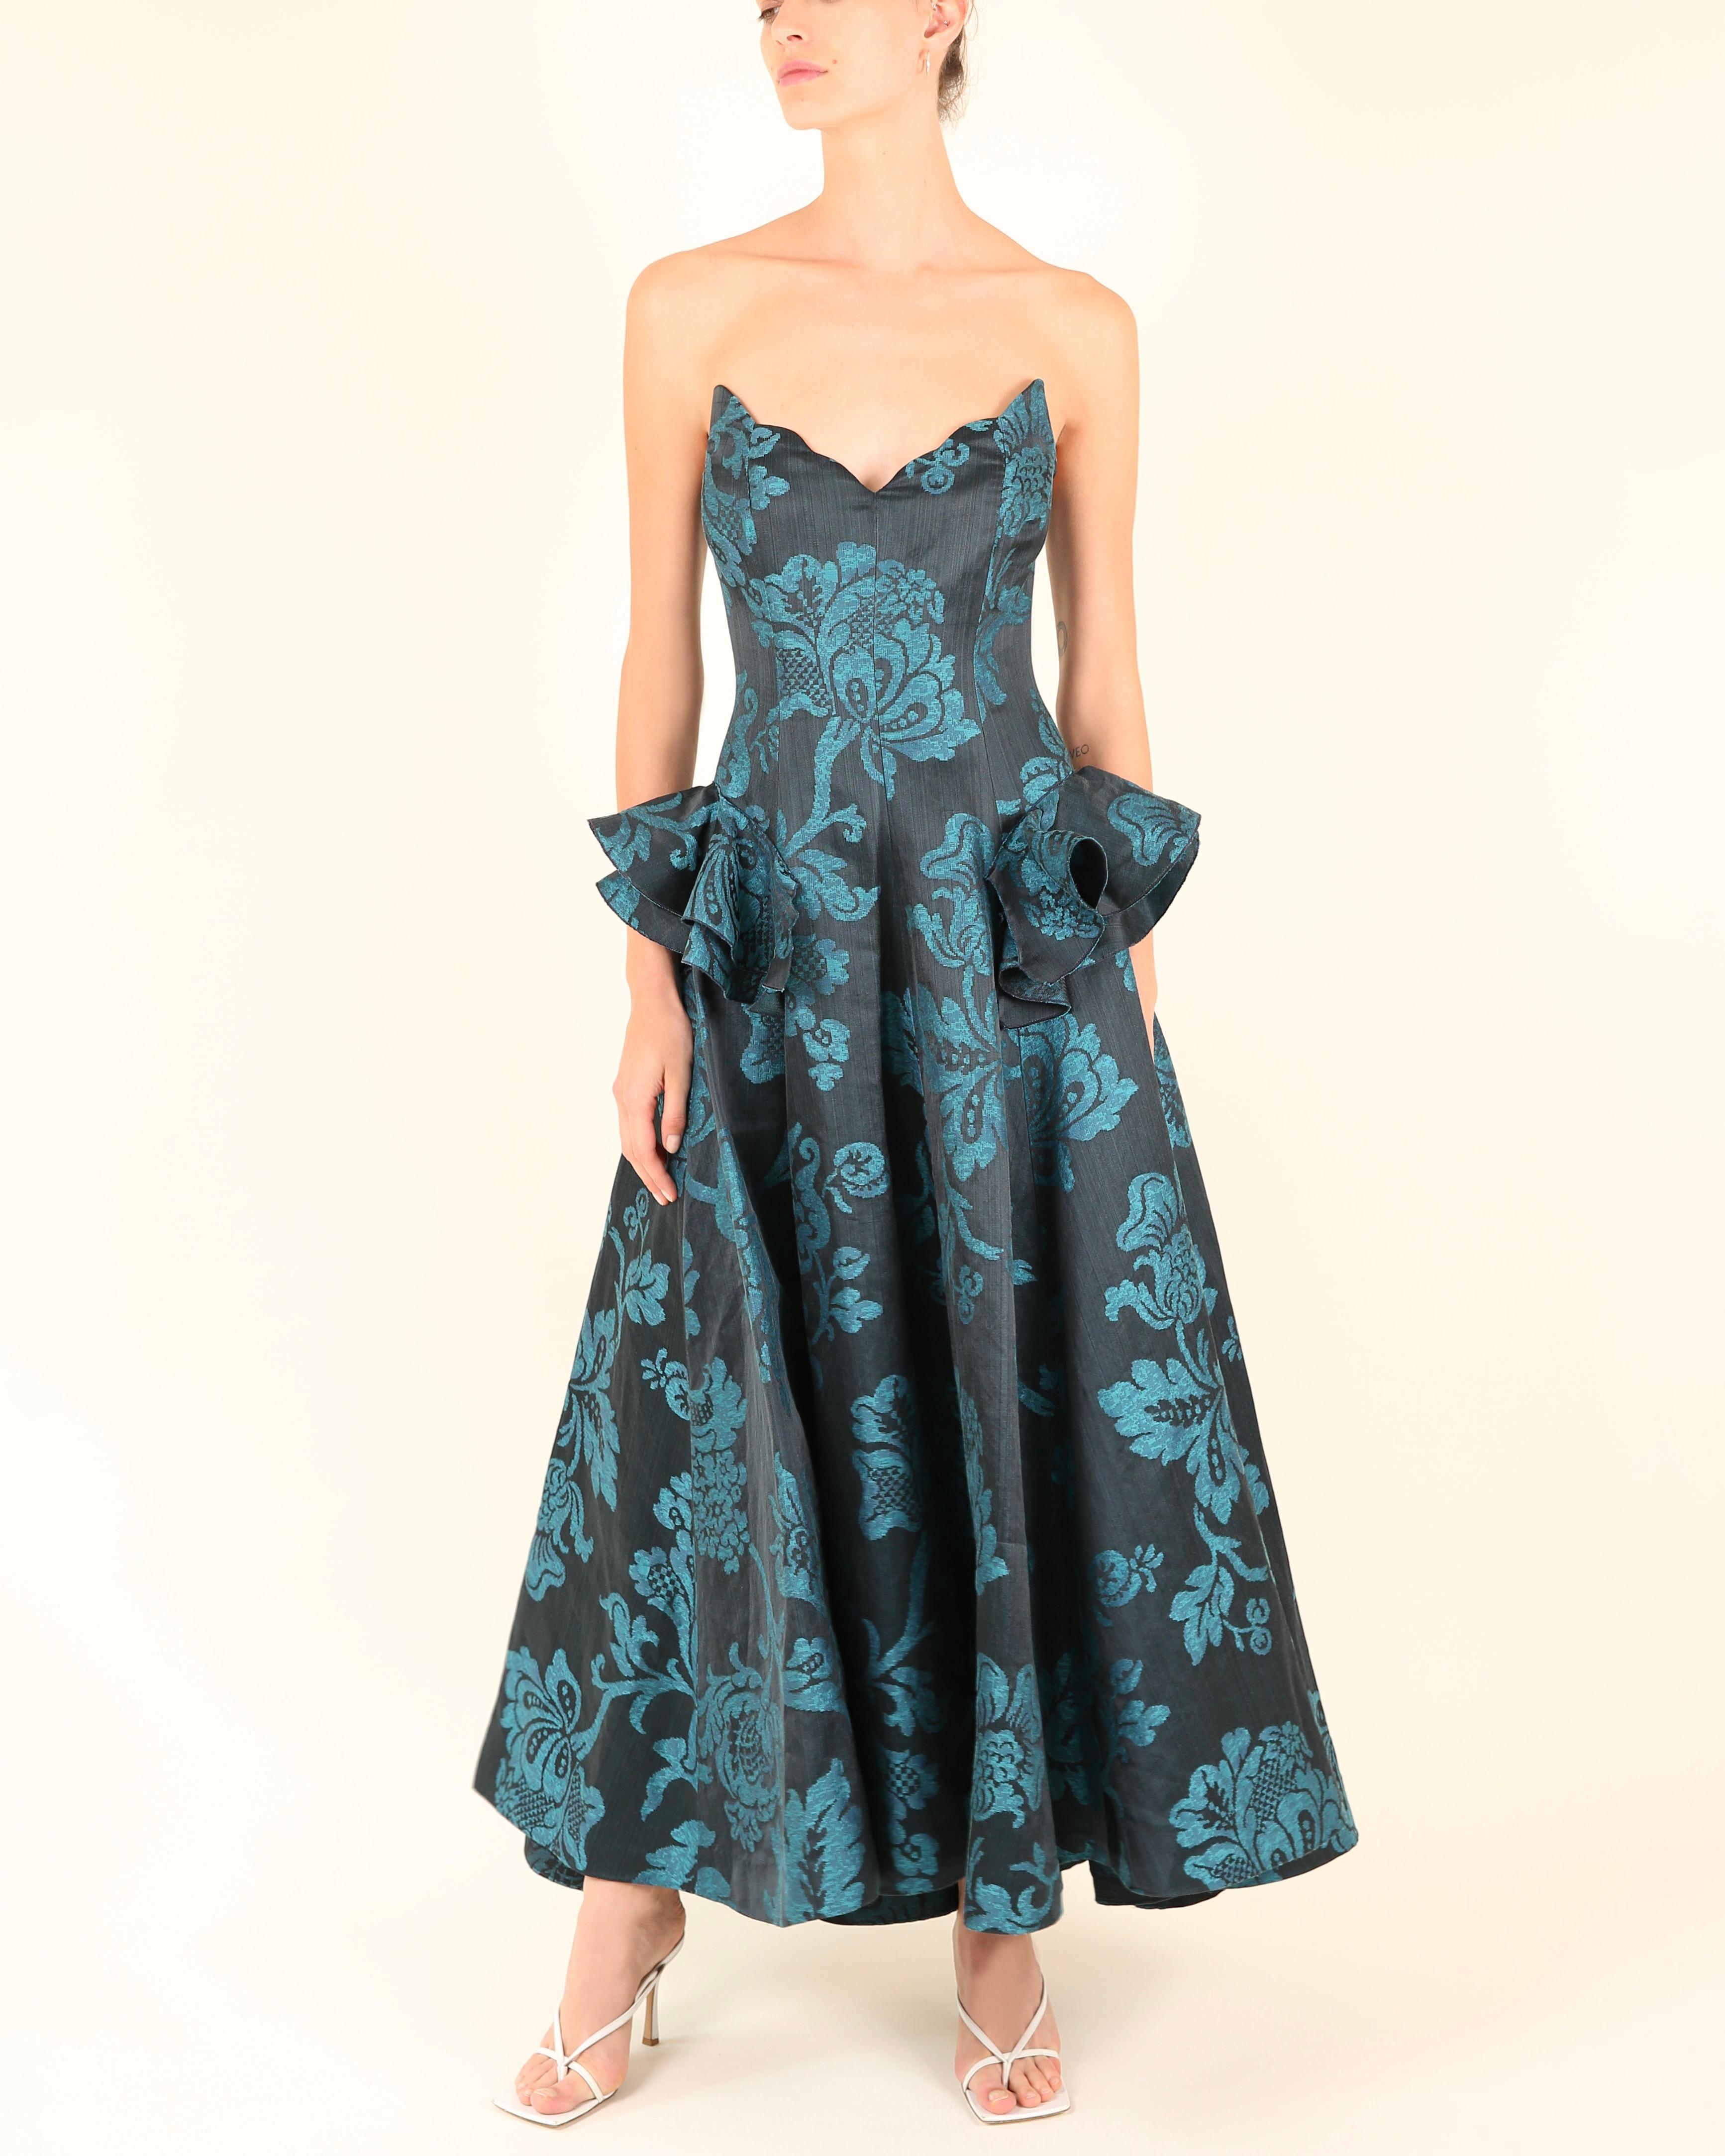 Blue Oscar de la Renta F/W06 strapless floral blue teal fit and flare dress gown XS For Sale